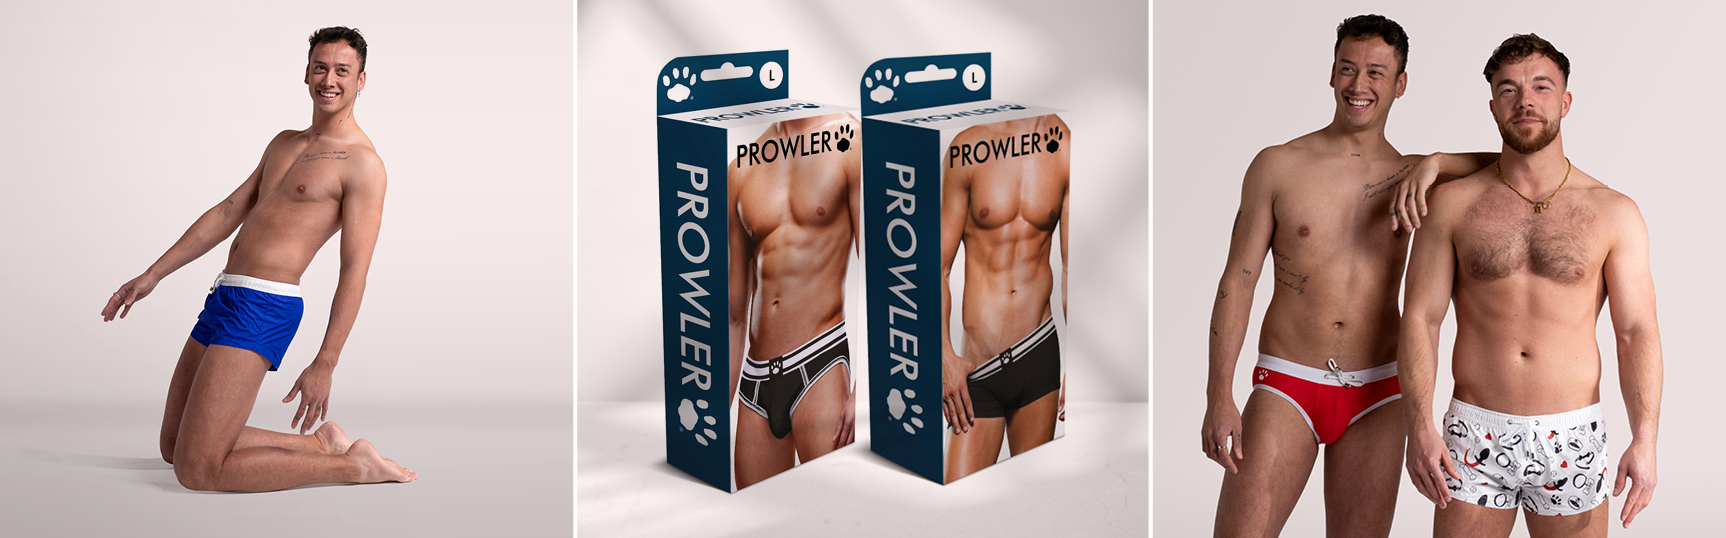 Prowler_Banner